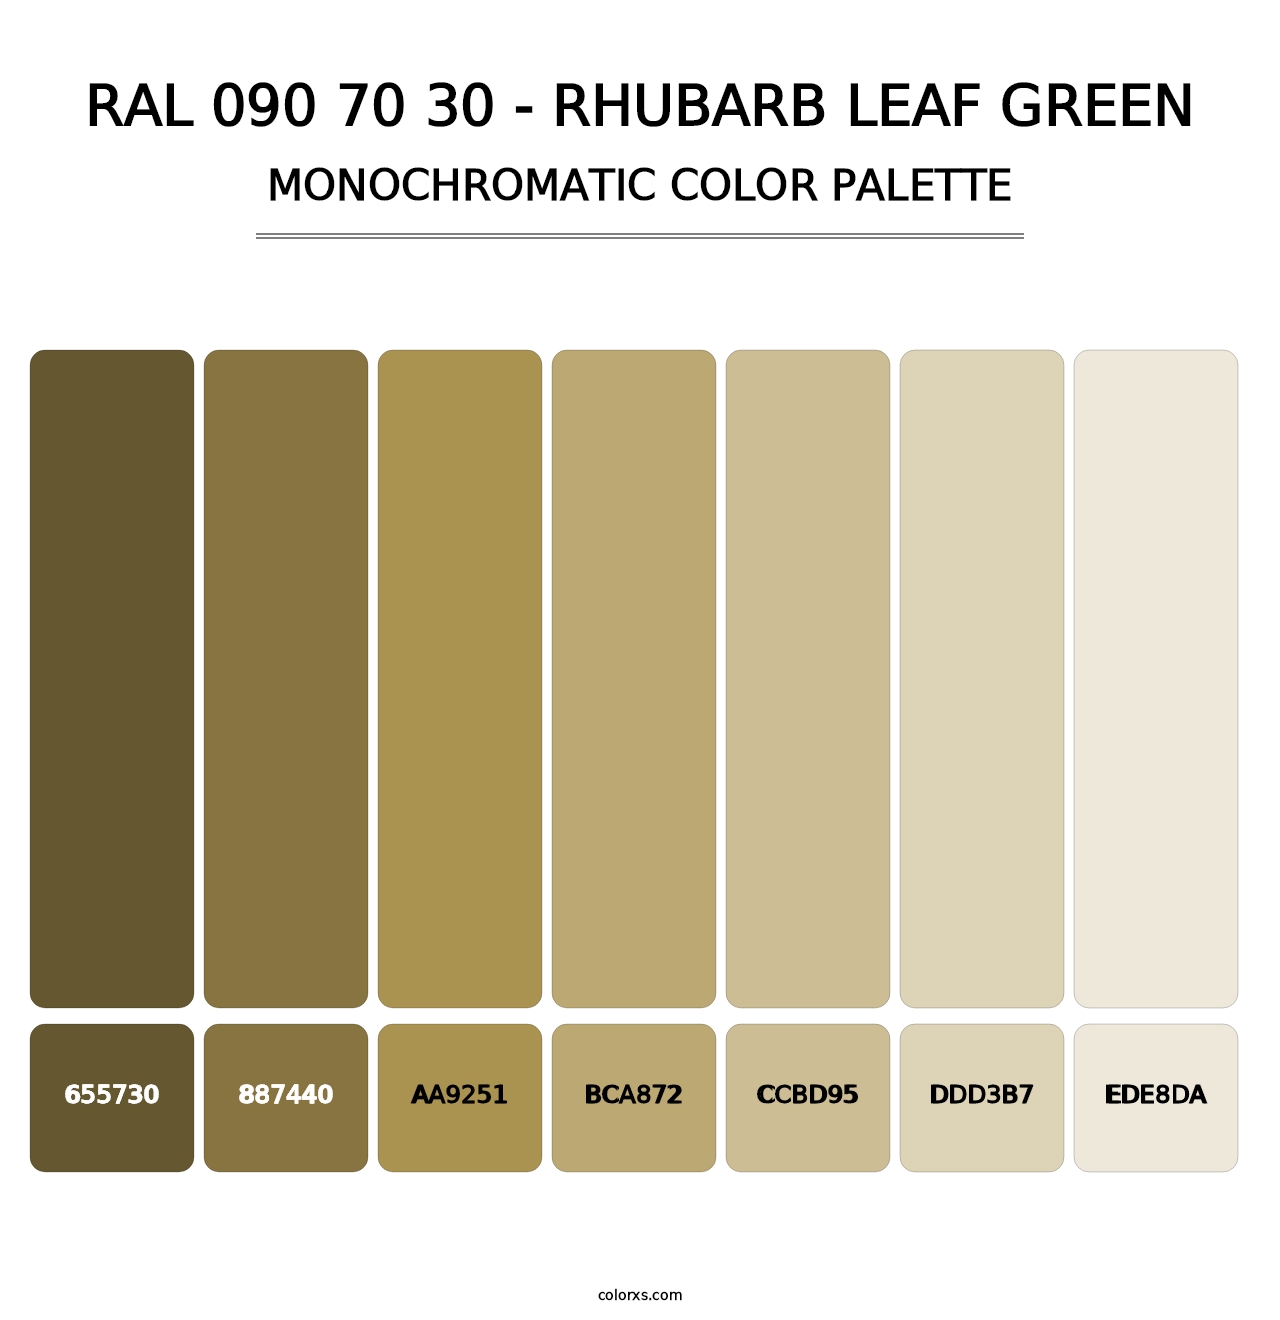 RAL 090 70 30 - Rhubarb Leaf Green - Monochromatic Color Palette